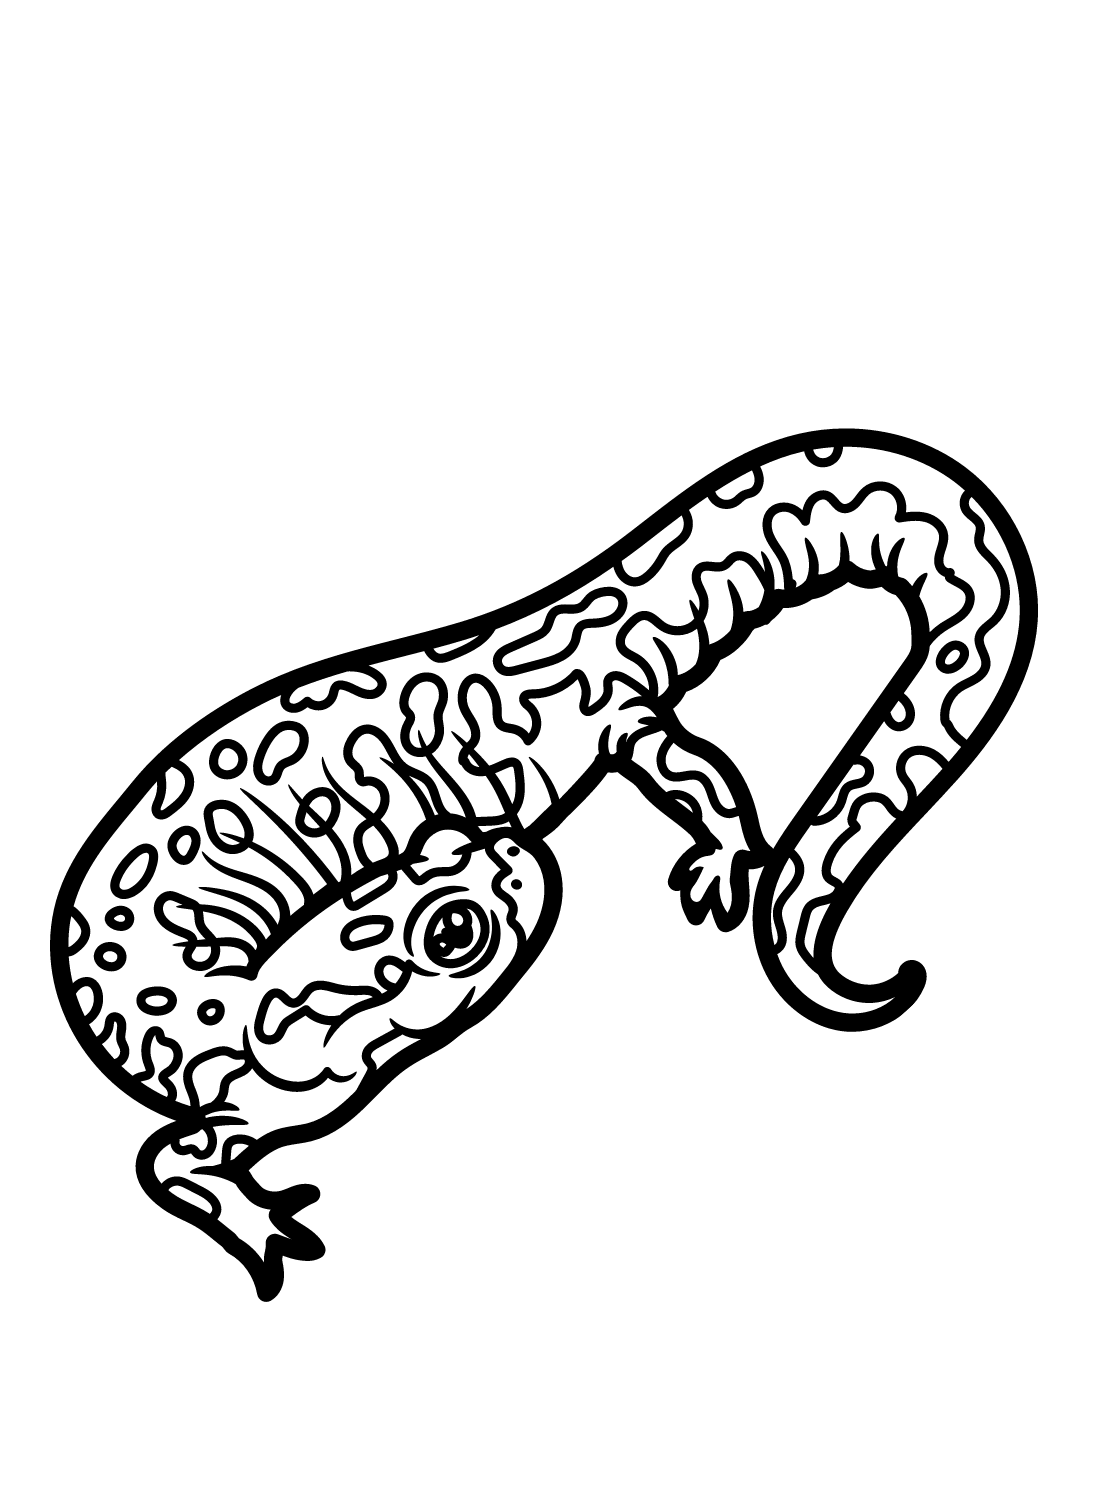 Wellerssalamander van Salamander